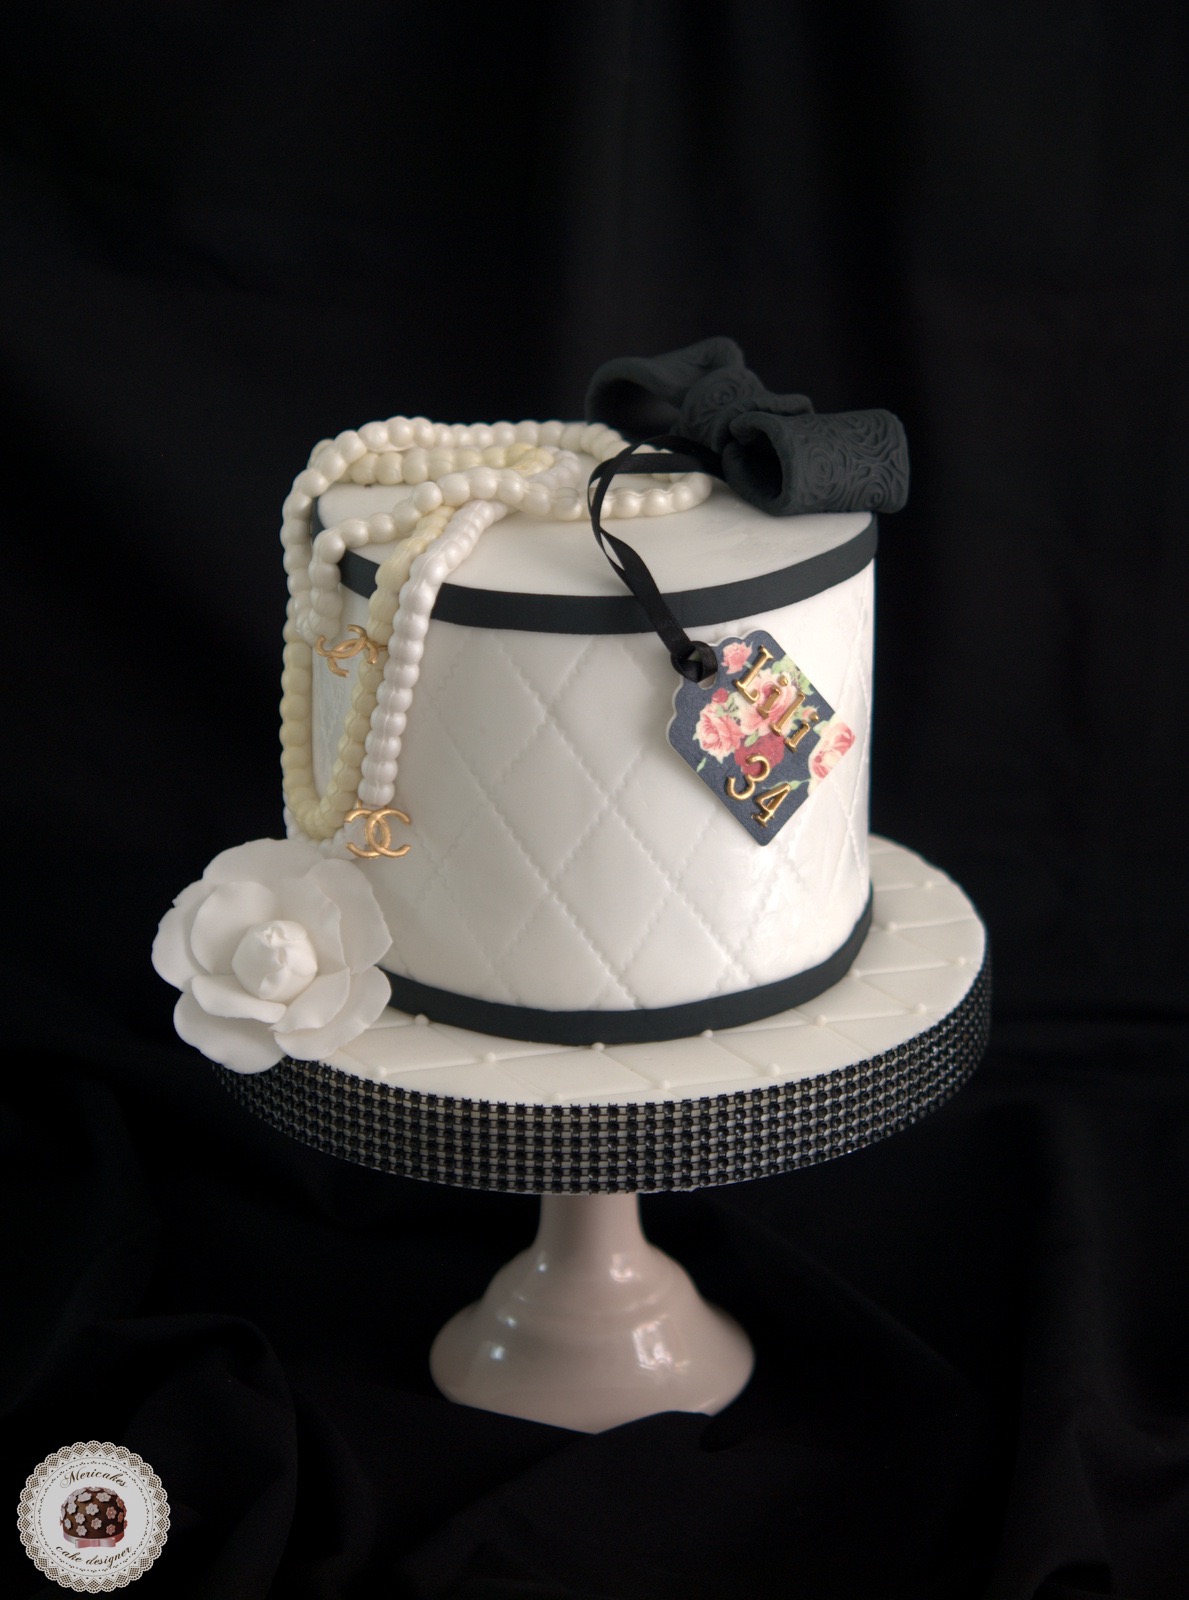 Tarta Cumpleaños - Chanel Chanel birthday cake - Mericakes - Cake Designer